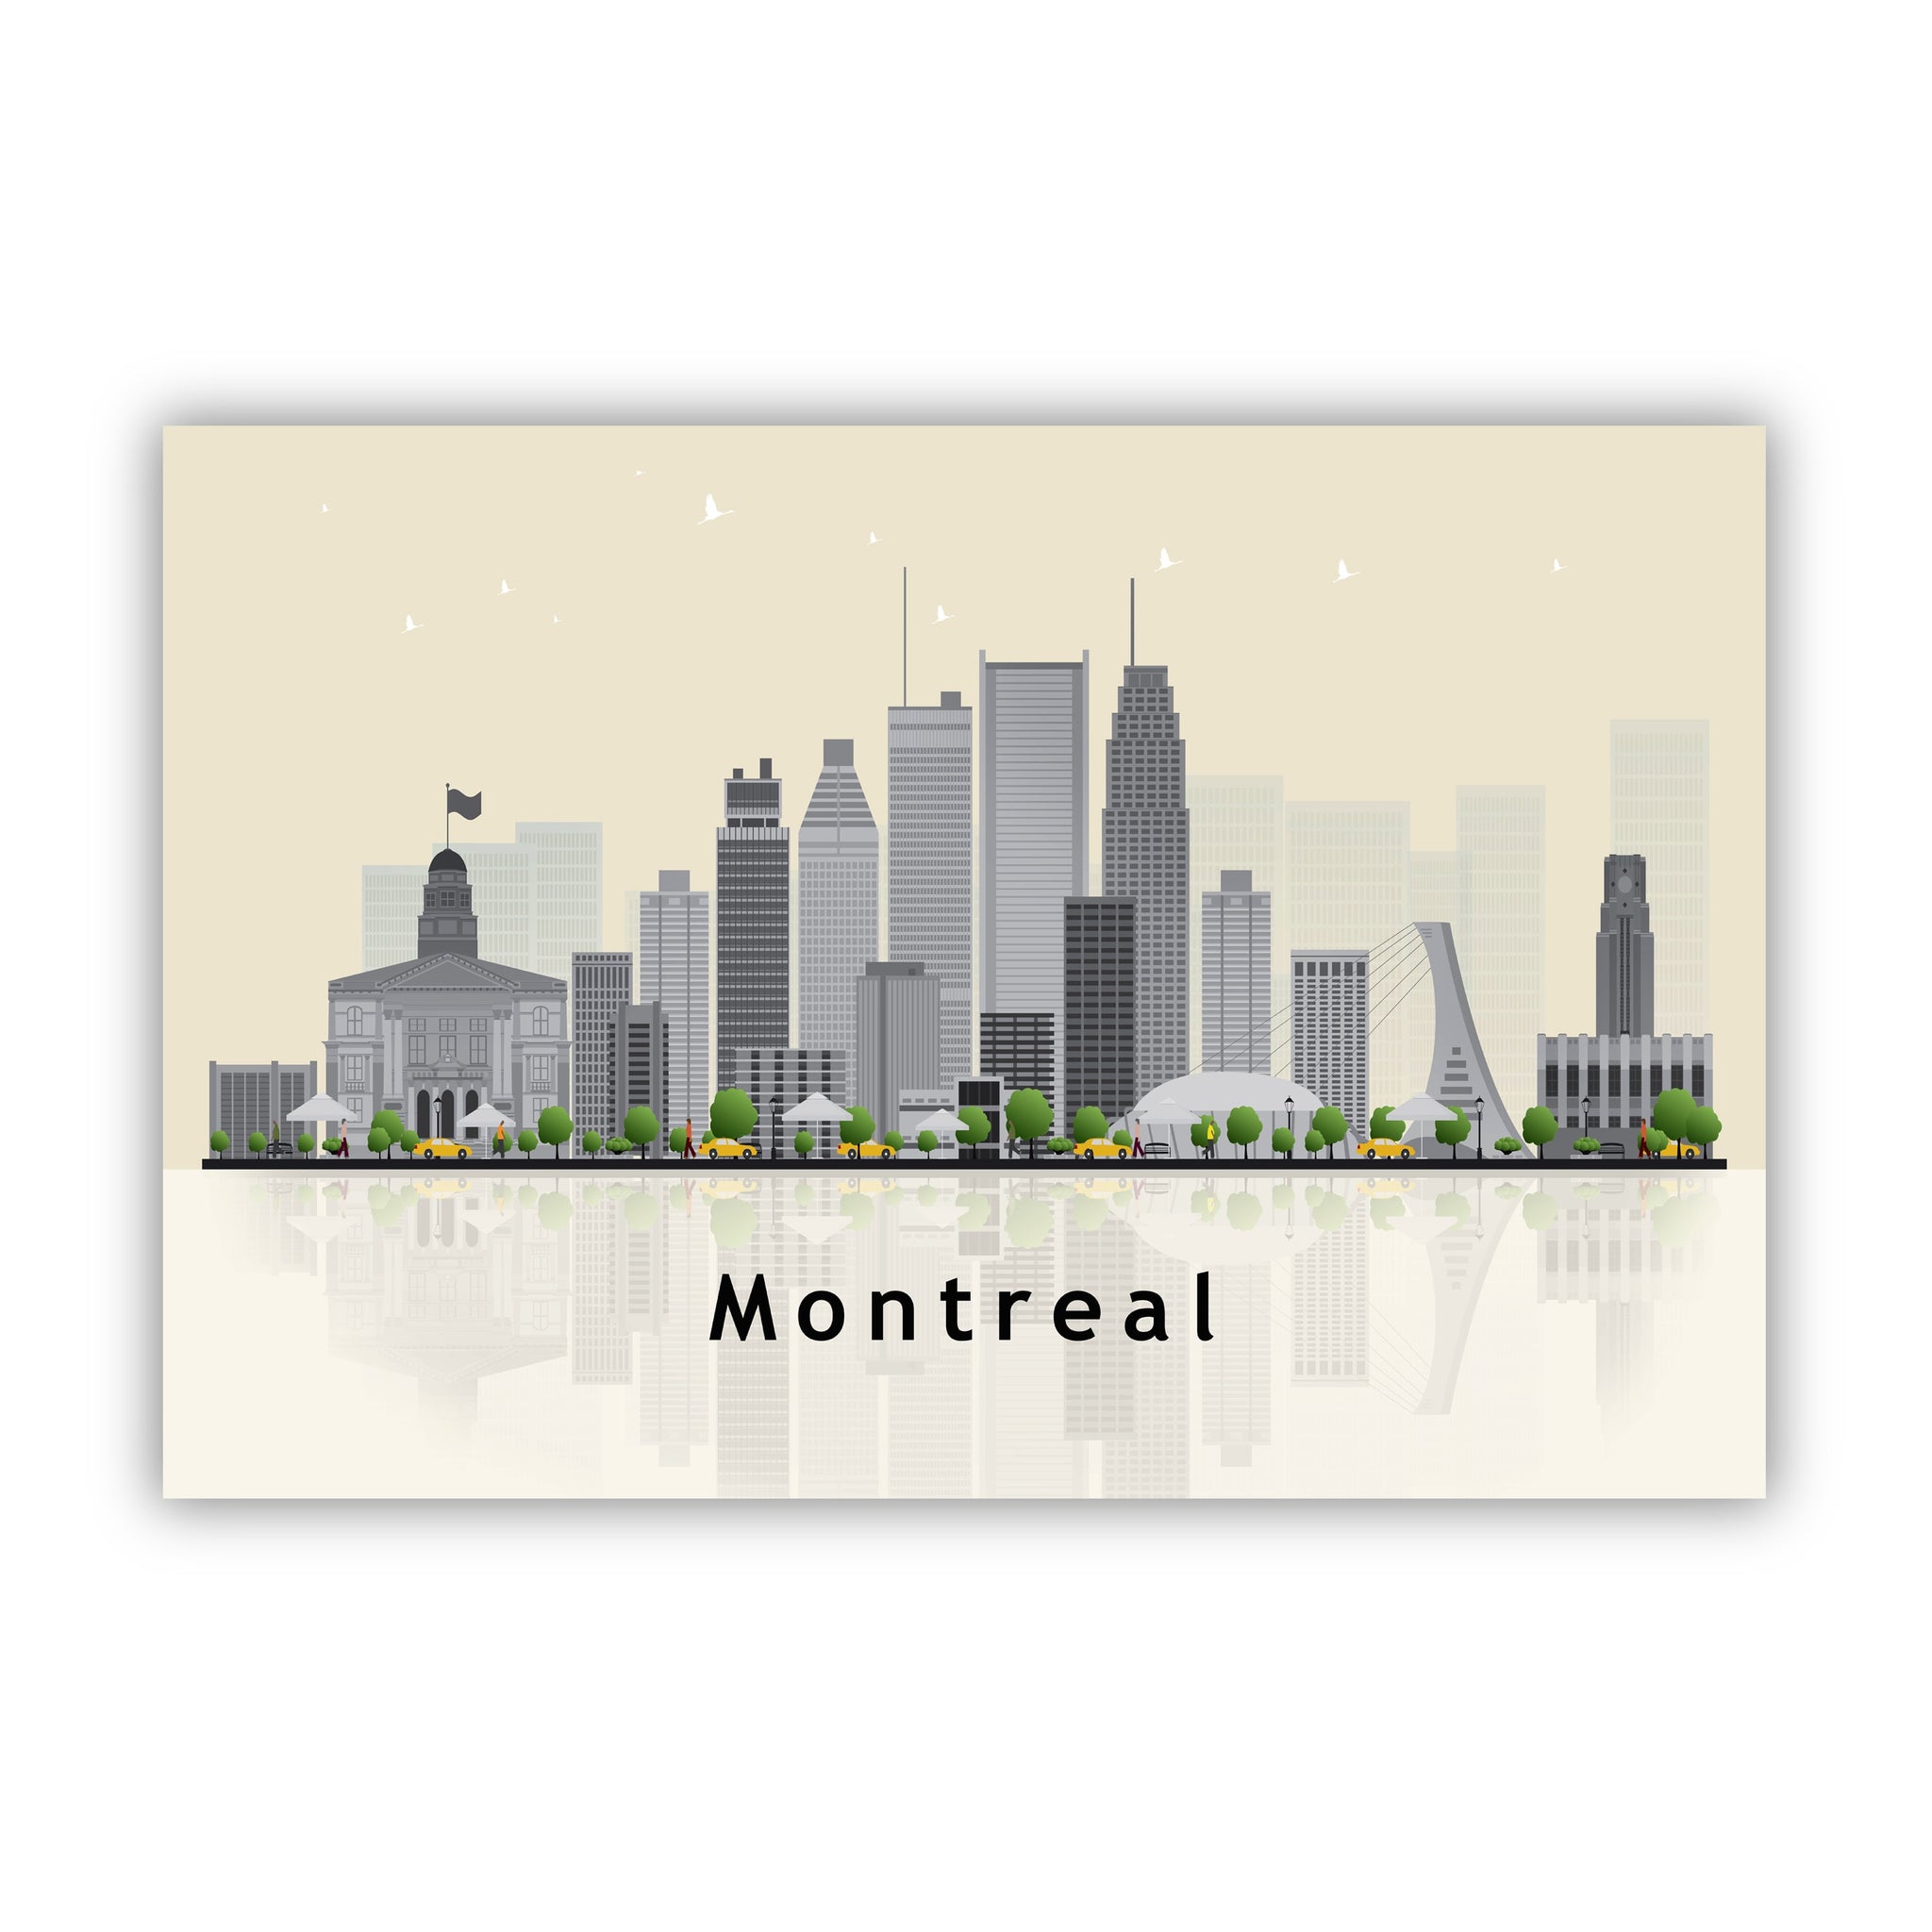 MONTREAL QUEBEC CANADA Illustration skyline poster, Canada modern skyline cityscape poster print, Landmark poster, Home wall art decoration